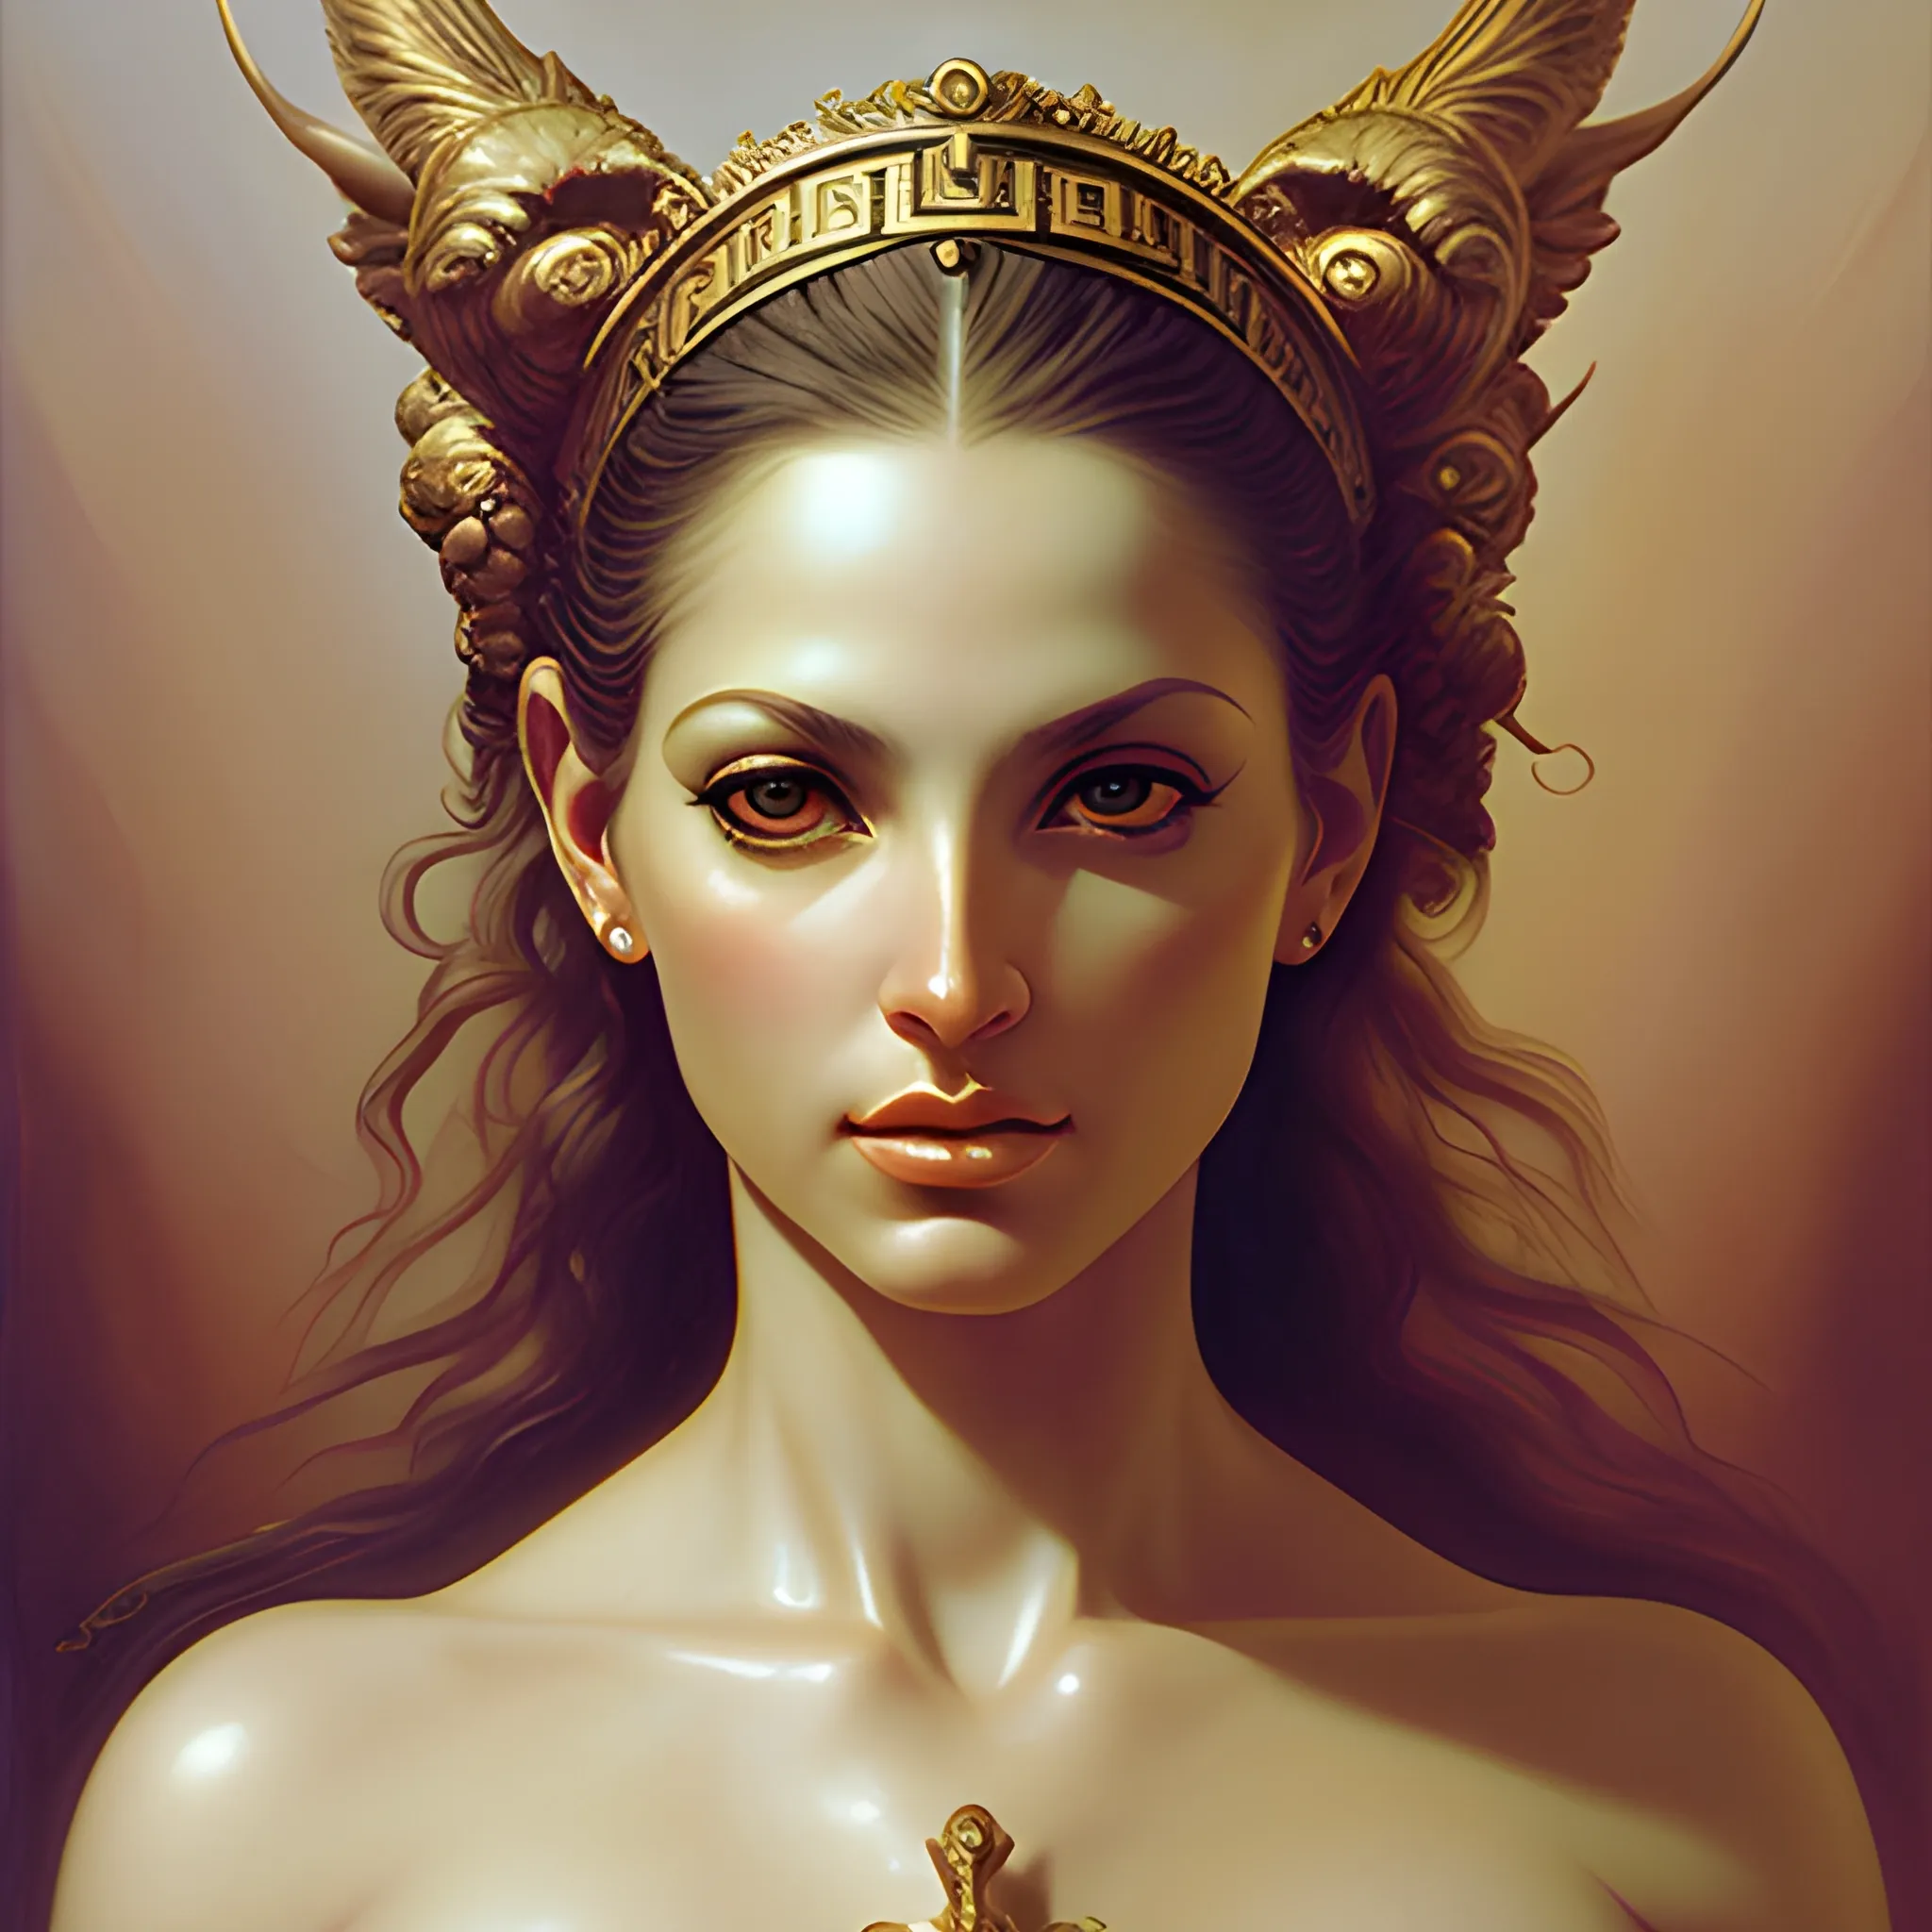 Exotic ethereal beautiful greek goddess, photorealist, boris vallejo and roberto ferri aspect ratio 9:16